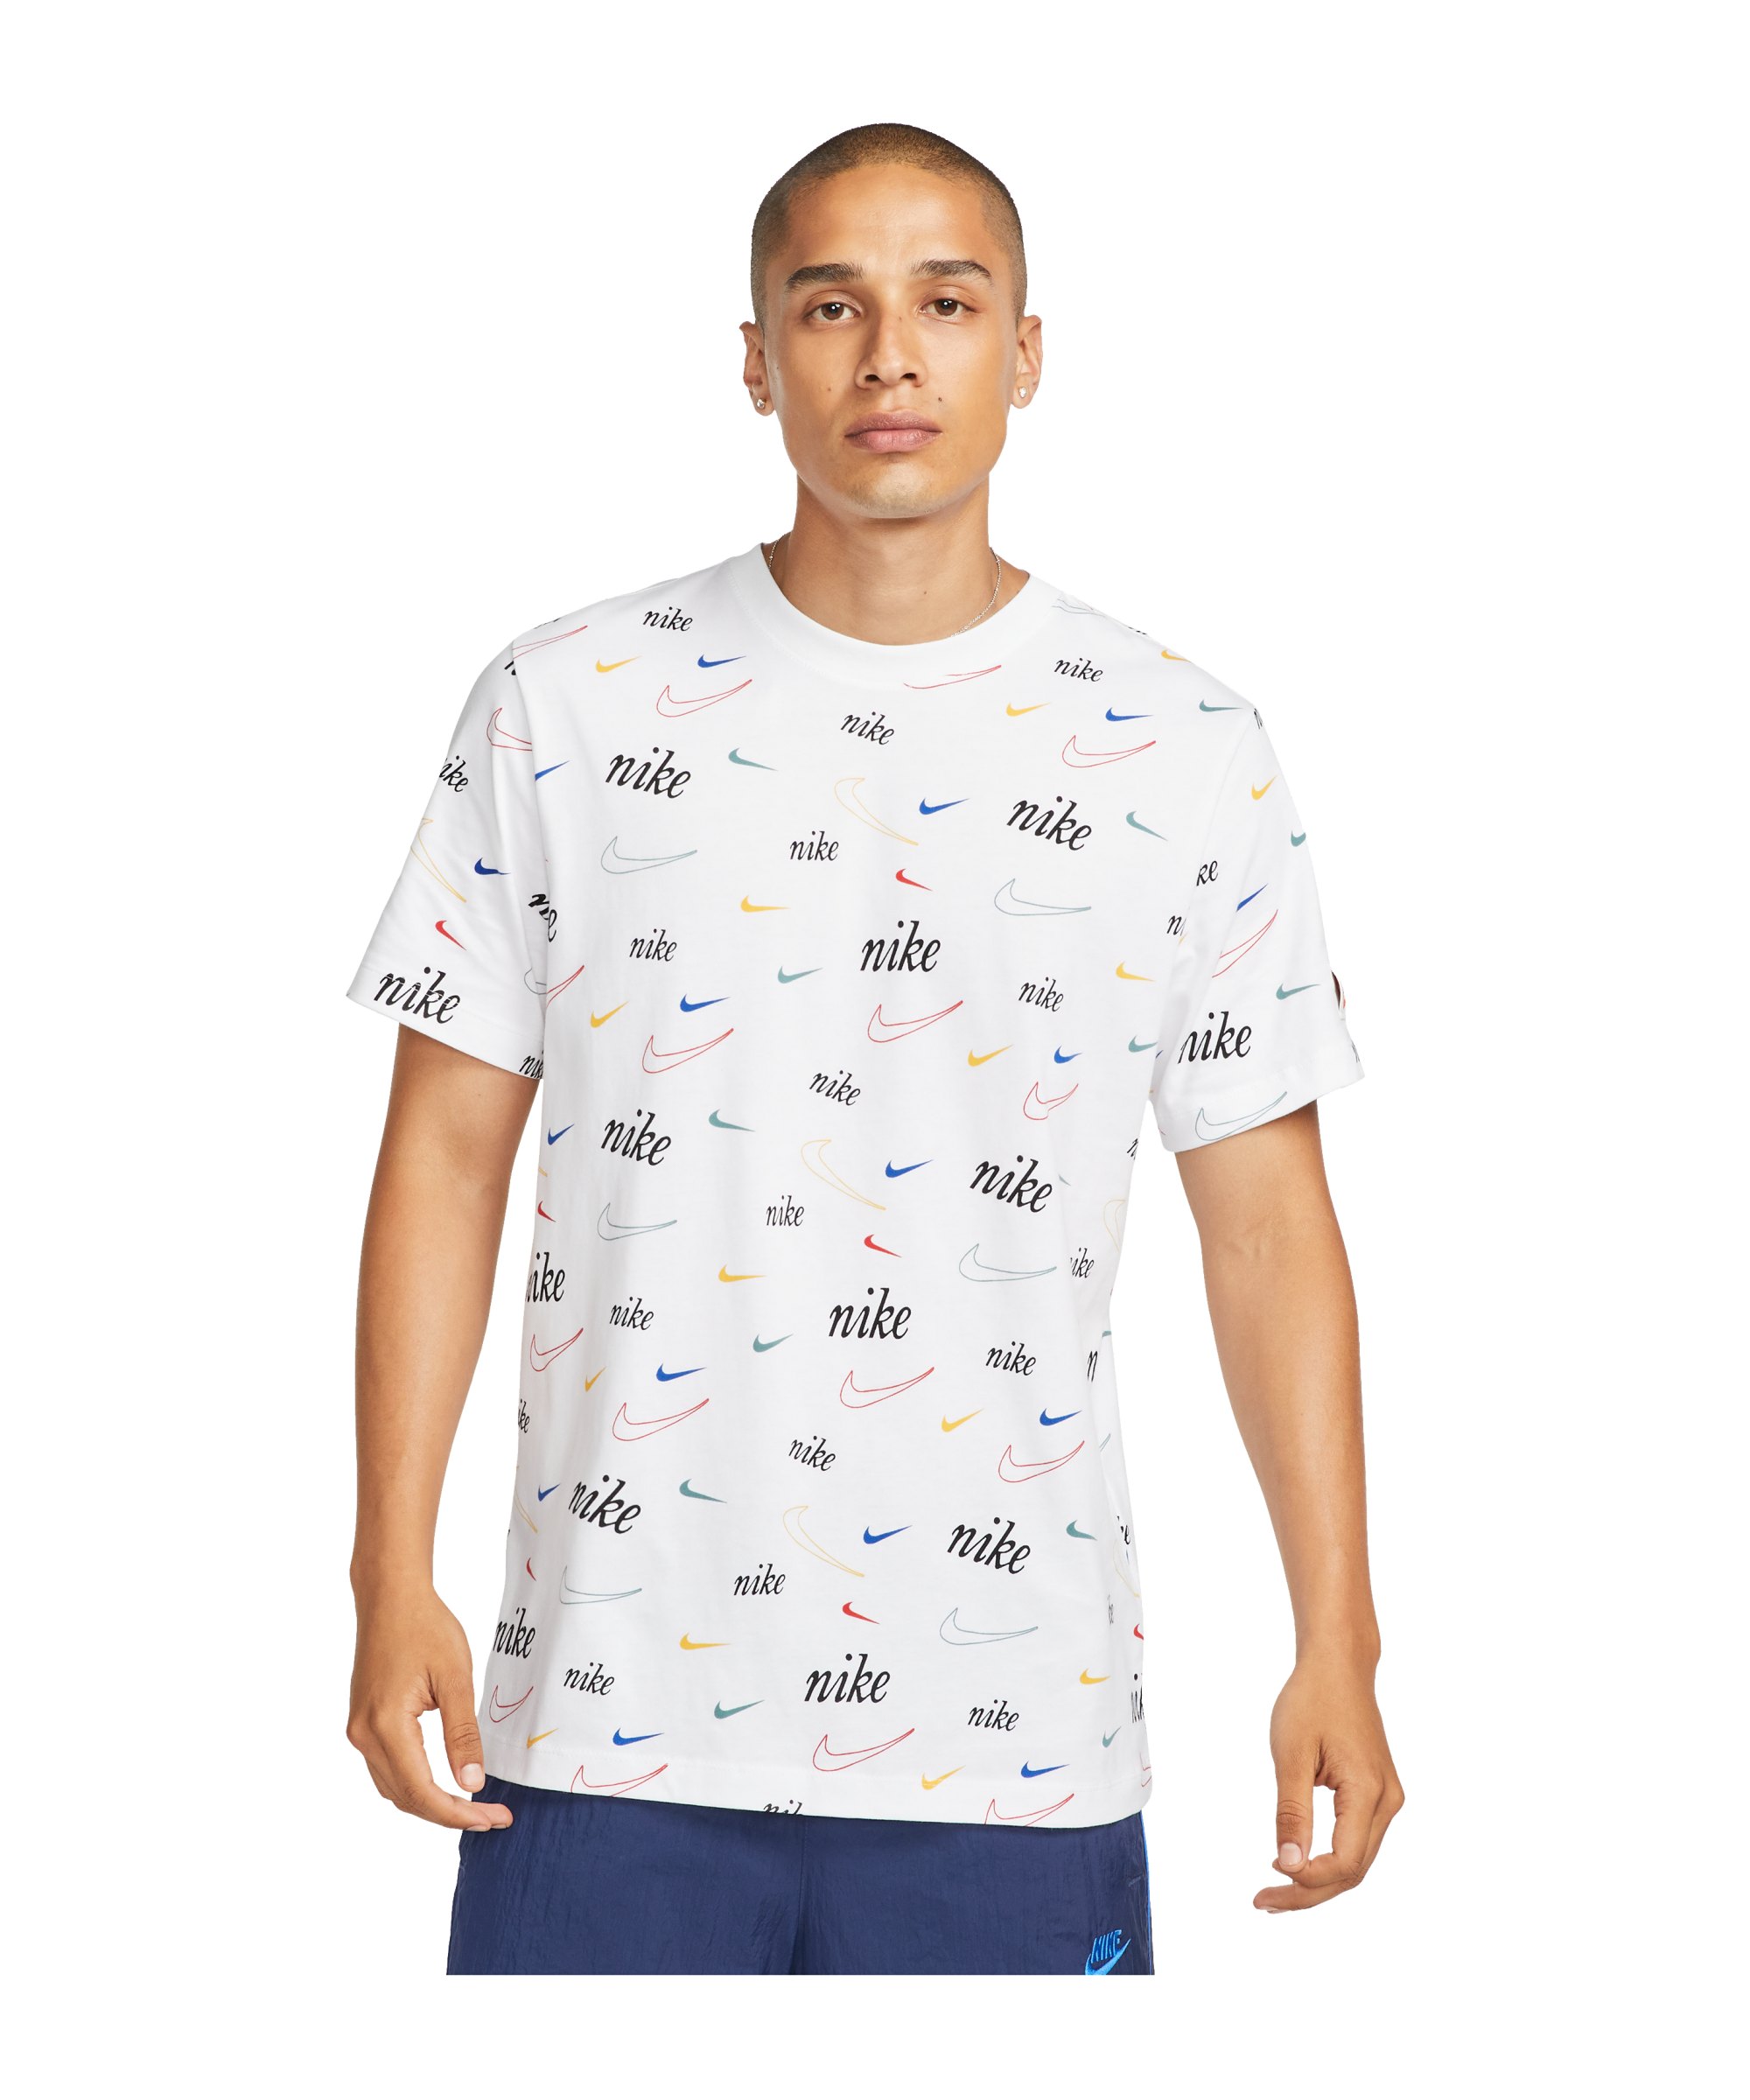 Nike Sportswear T-Shirt Weiss Schwarz F100 - weiss